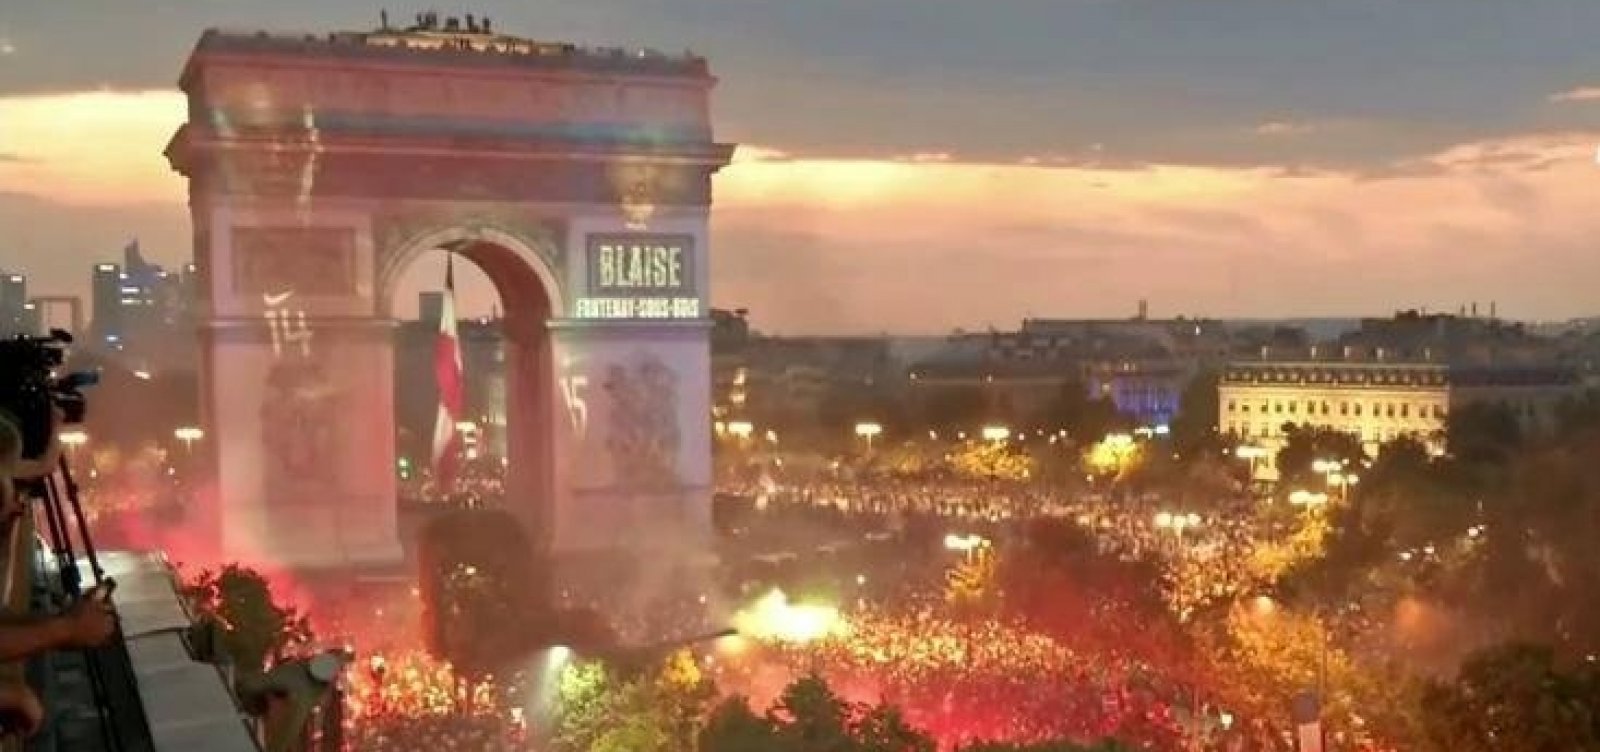 Paris vive dia de festa após título mundial; polícia registra atos de vandalismo